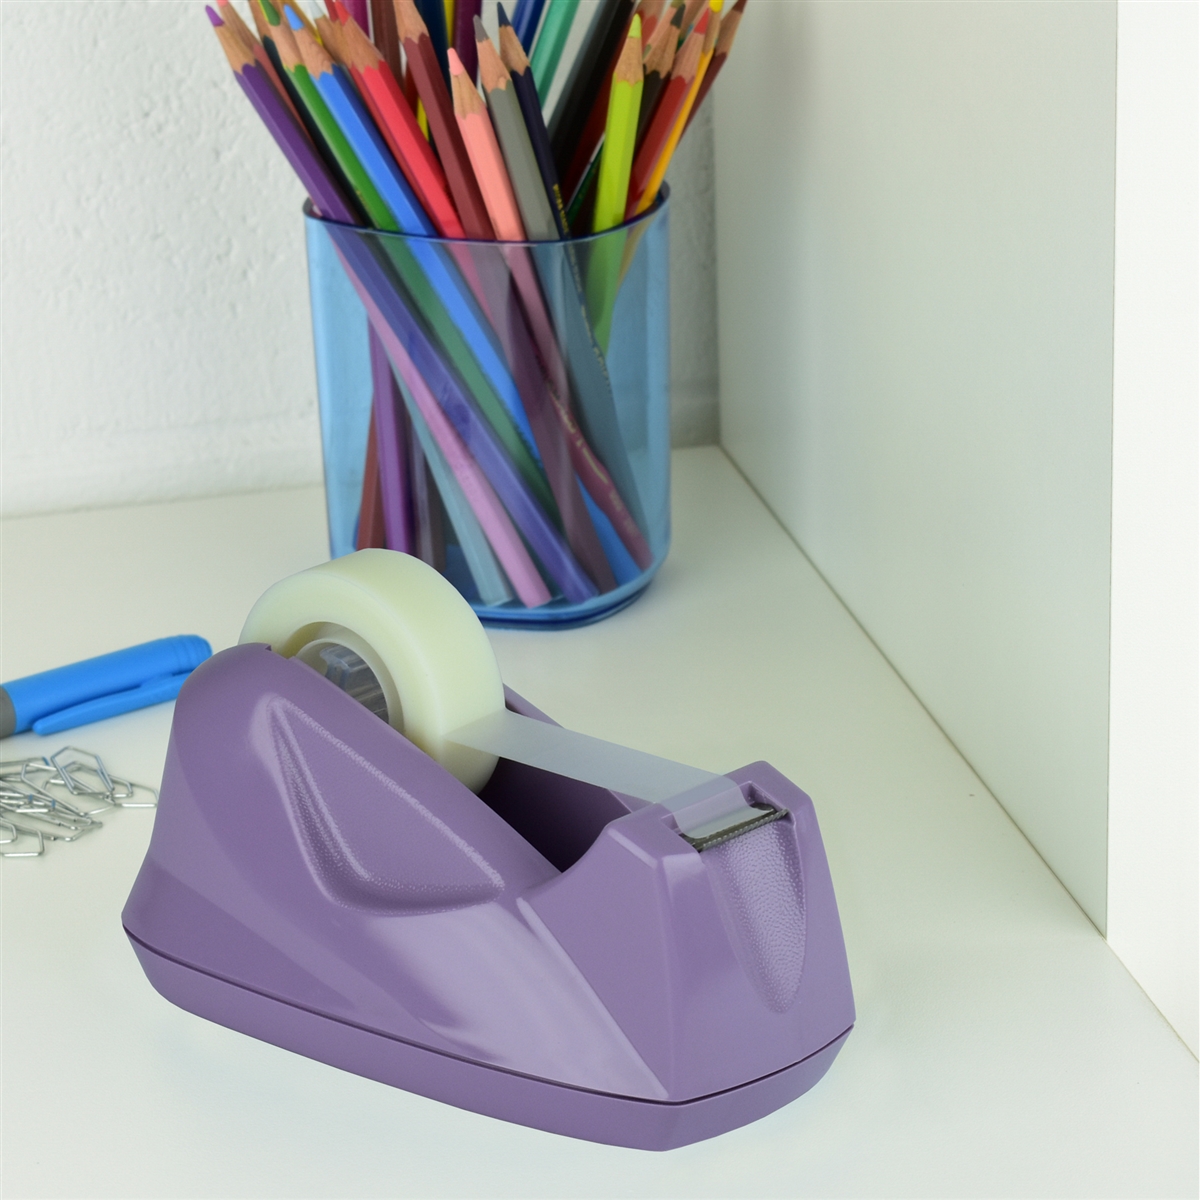 Acrimet Premium Desktop Tape Dispenser, Plastic, Non-Skid Base (Heavy Duty)  (Purple Color)